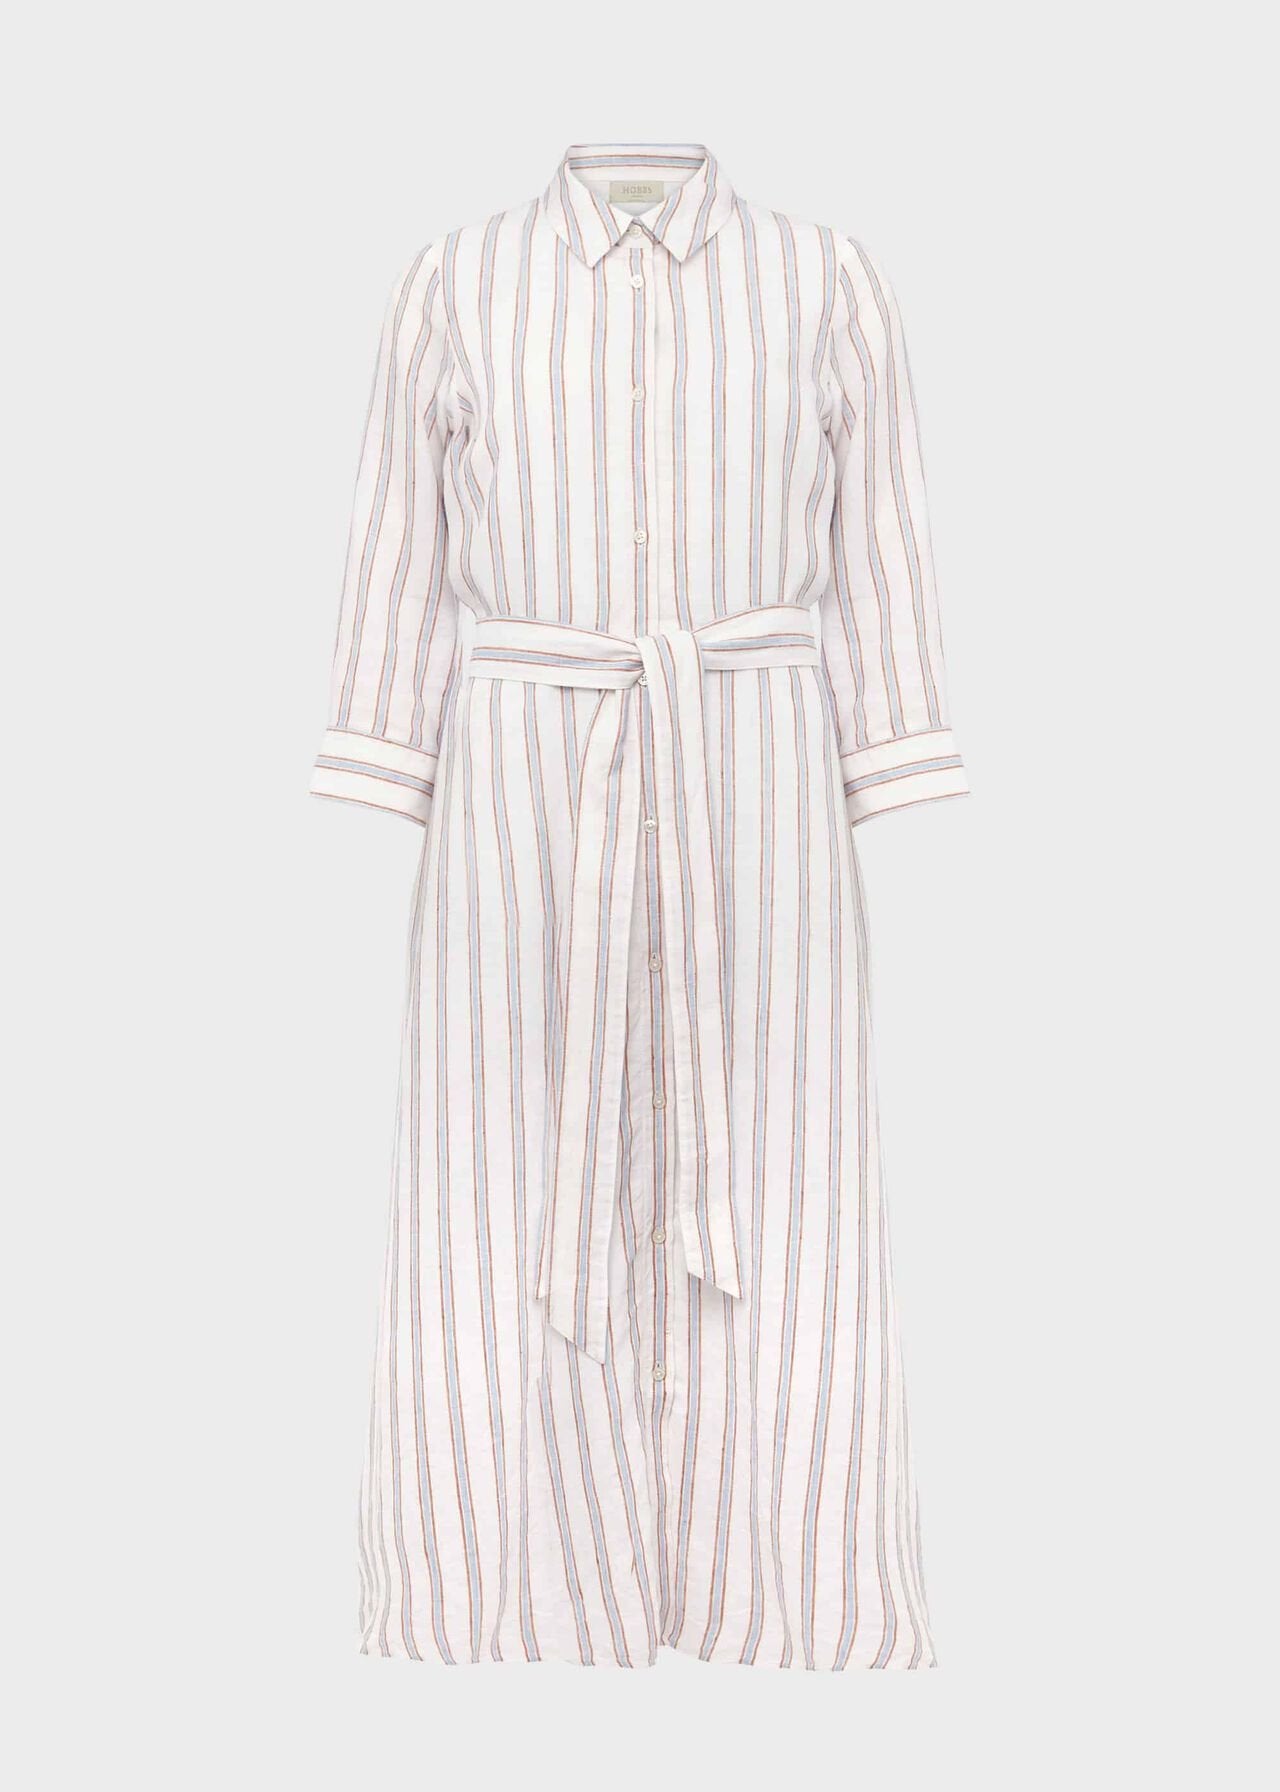 Ciara Linen Dress 0121/5914/9094l00 Ivory-Multi